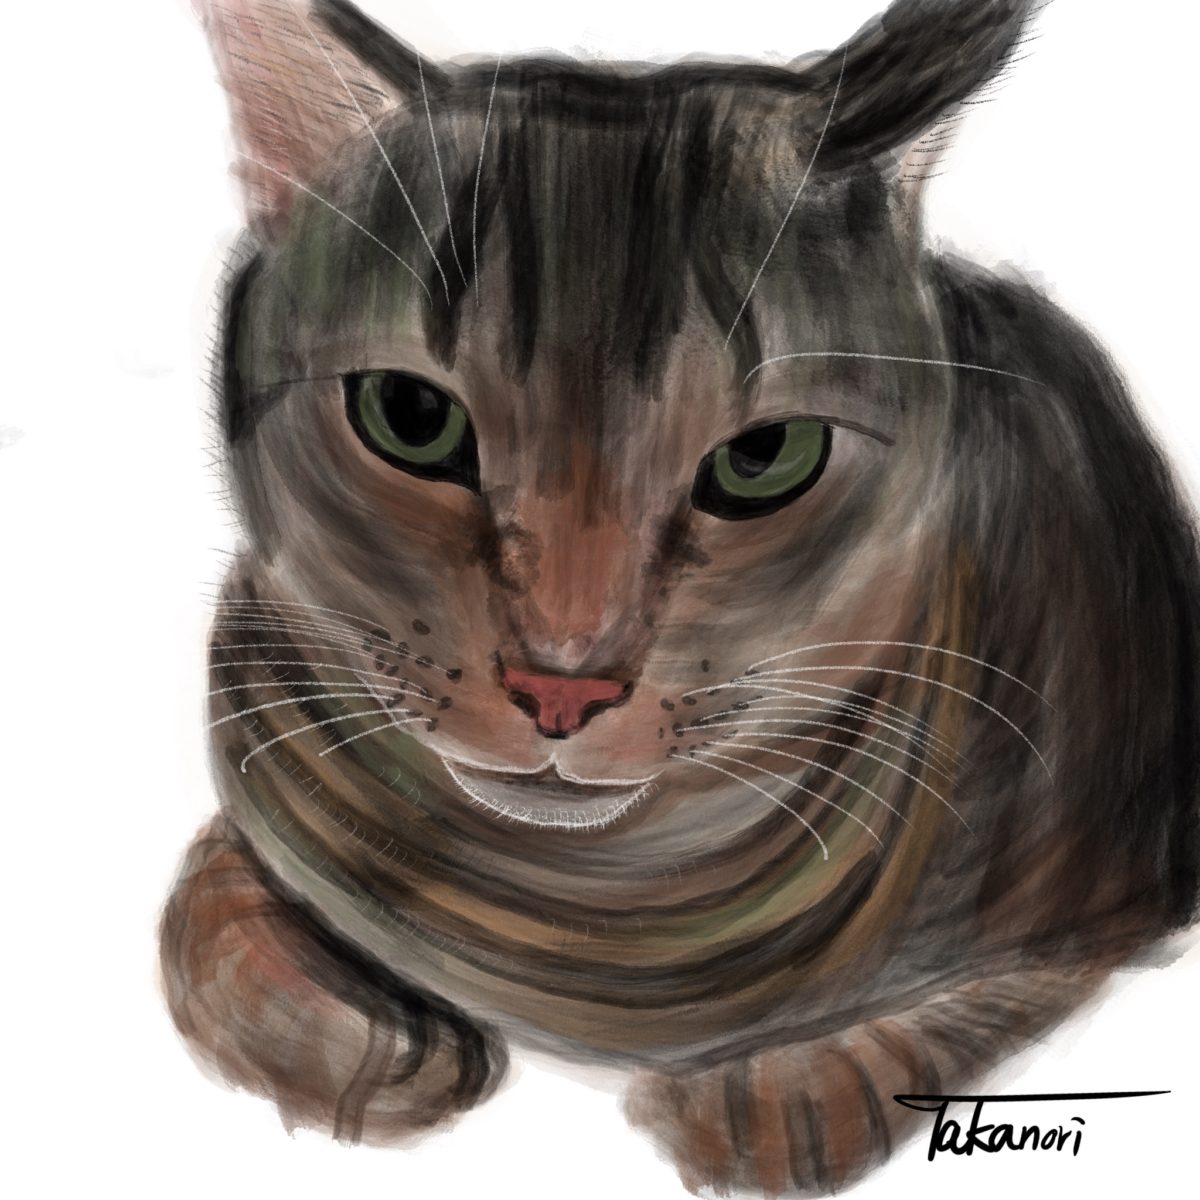 A Cat Illustration